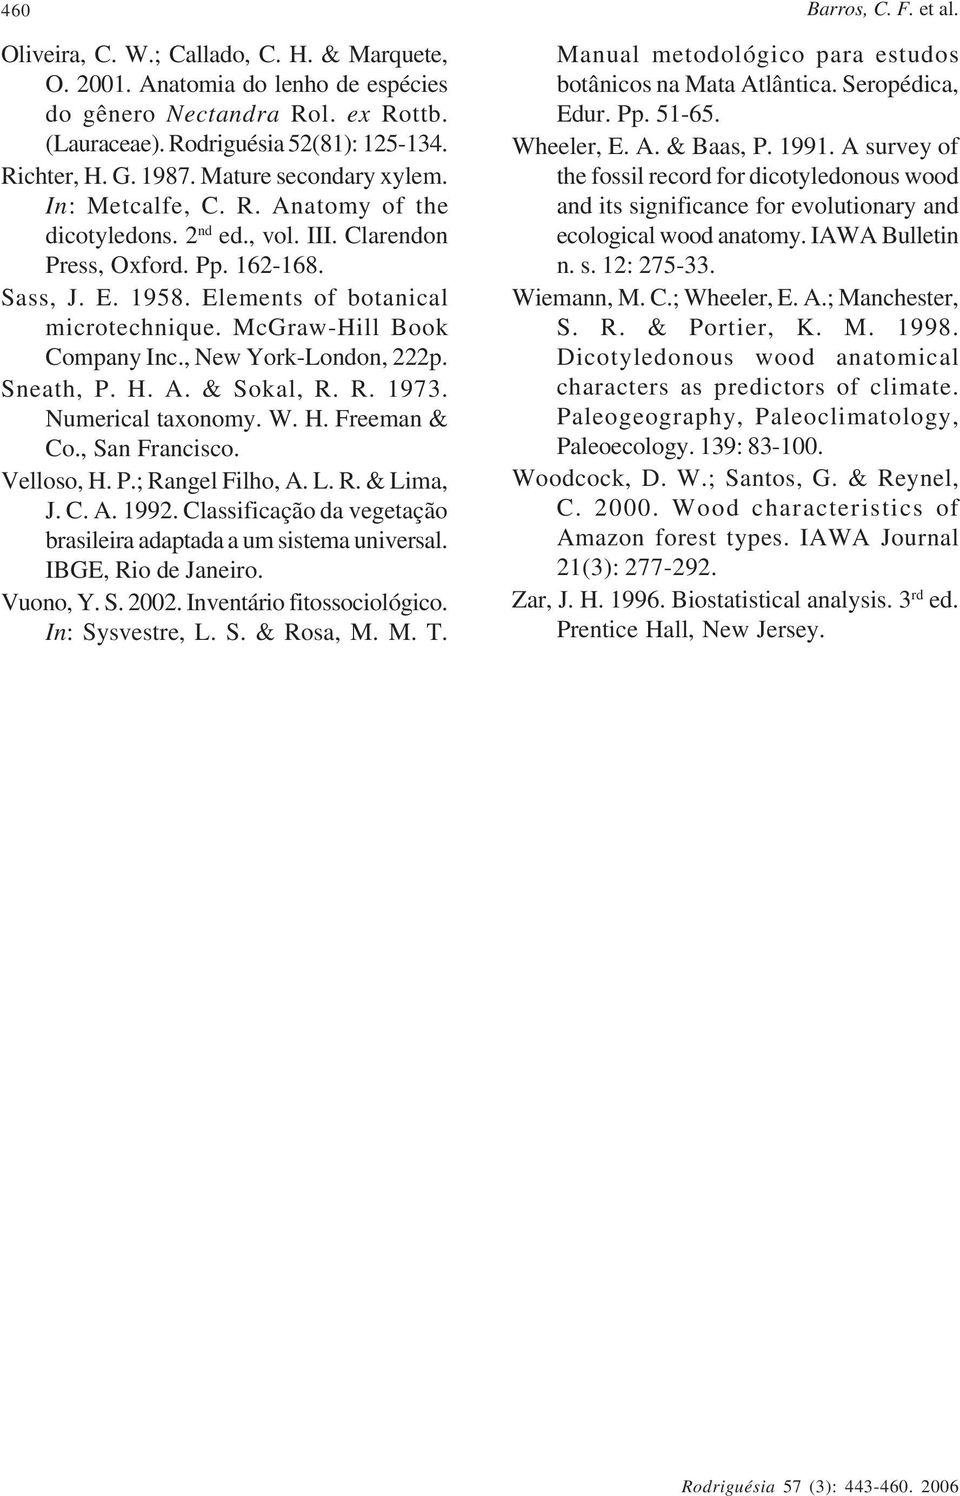 McGraw-Hill Book Company Inc., New York-London, 222p. Sneath, P. H. A. & Sokal, R. R. 1973. Numerical taxonomy. W. H. Freeman & Co., San Francisco. Velloso, H. P.; Rangel Filho, A. L. R. & Lima, J. C. A. 1992.